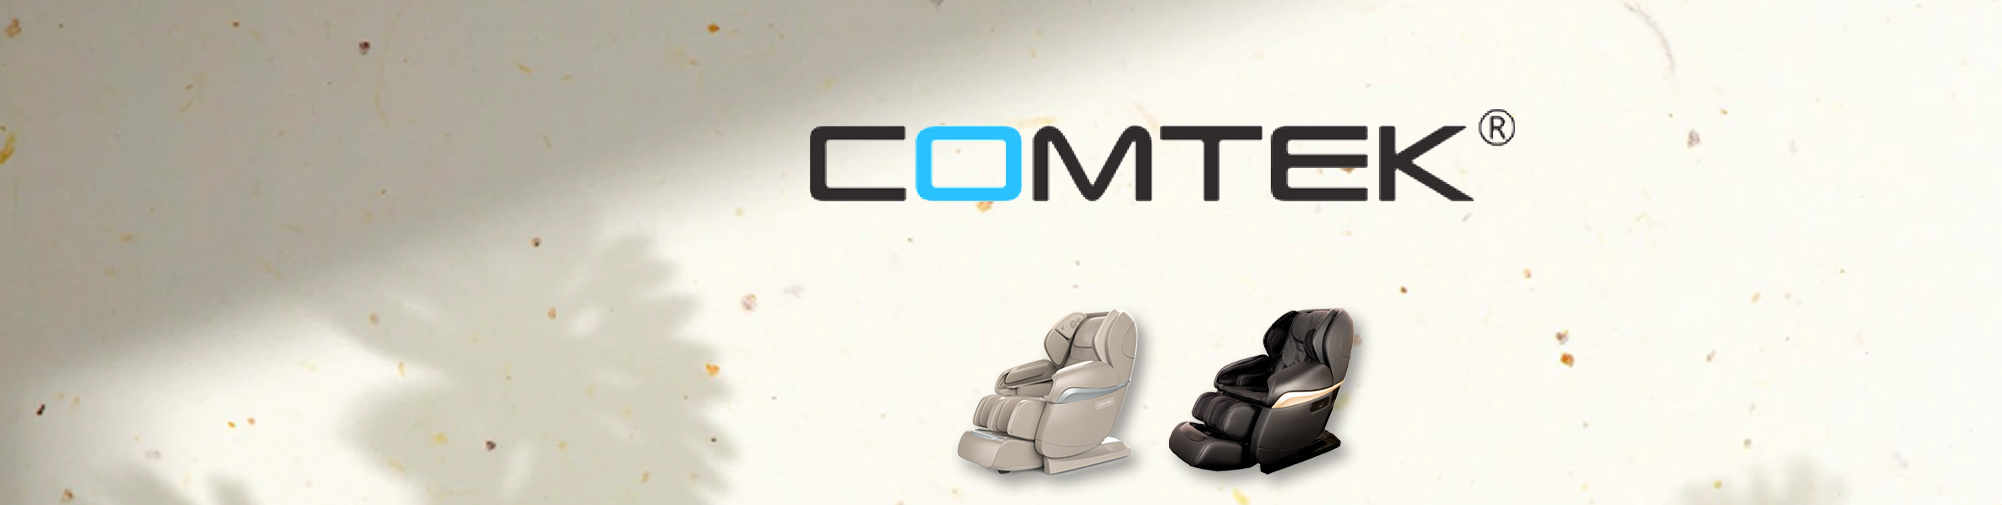 COMTEK - تولید کننده اصلی حرفه ای | ماساژ صندلی جهان